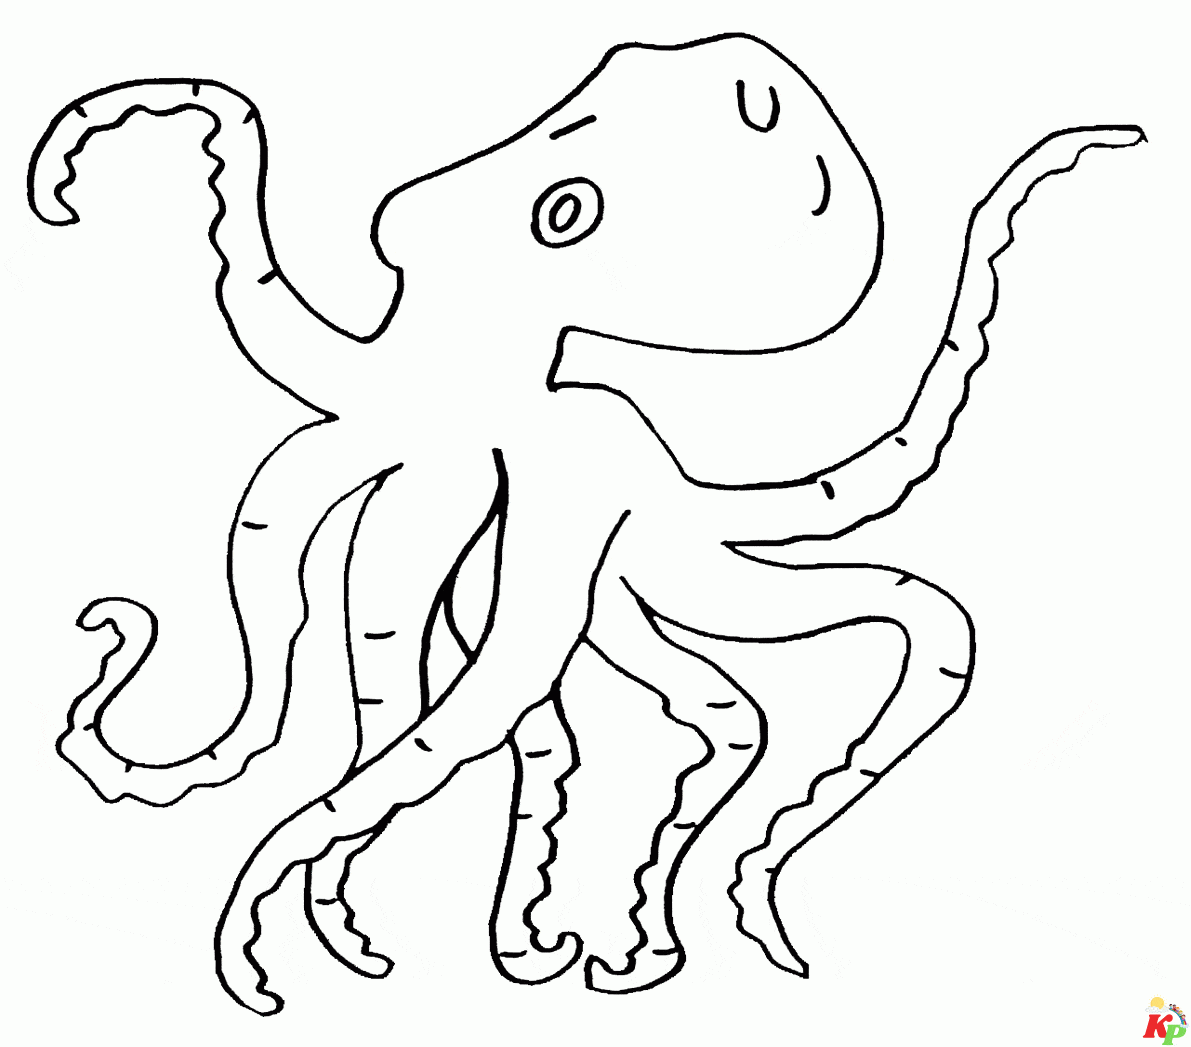 Octopus14